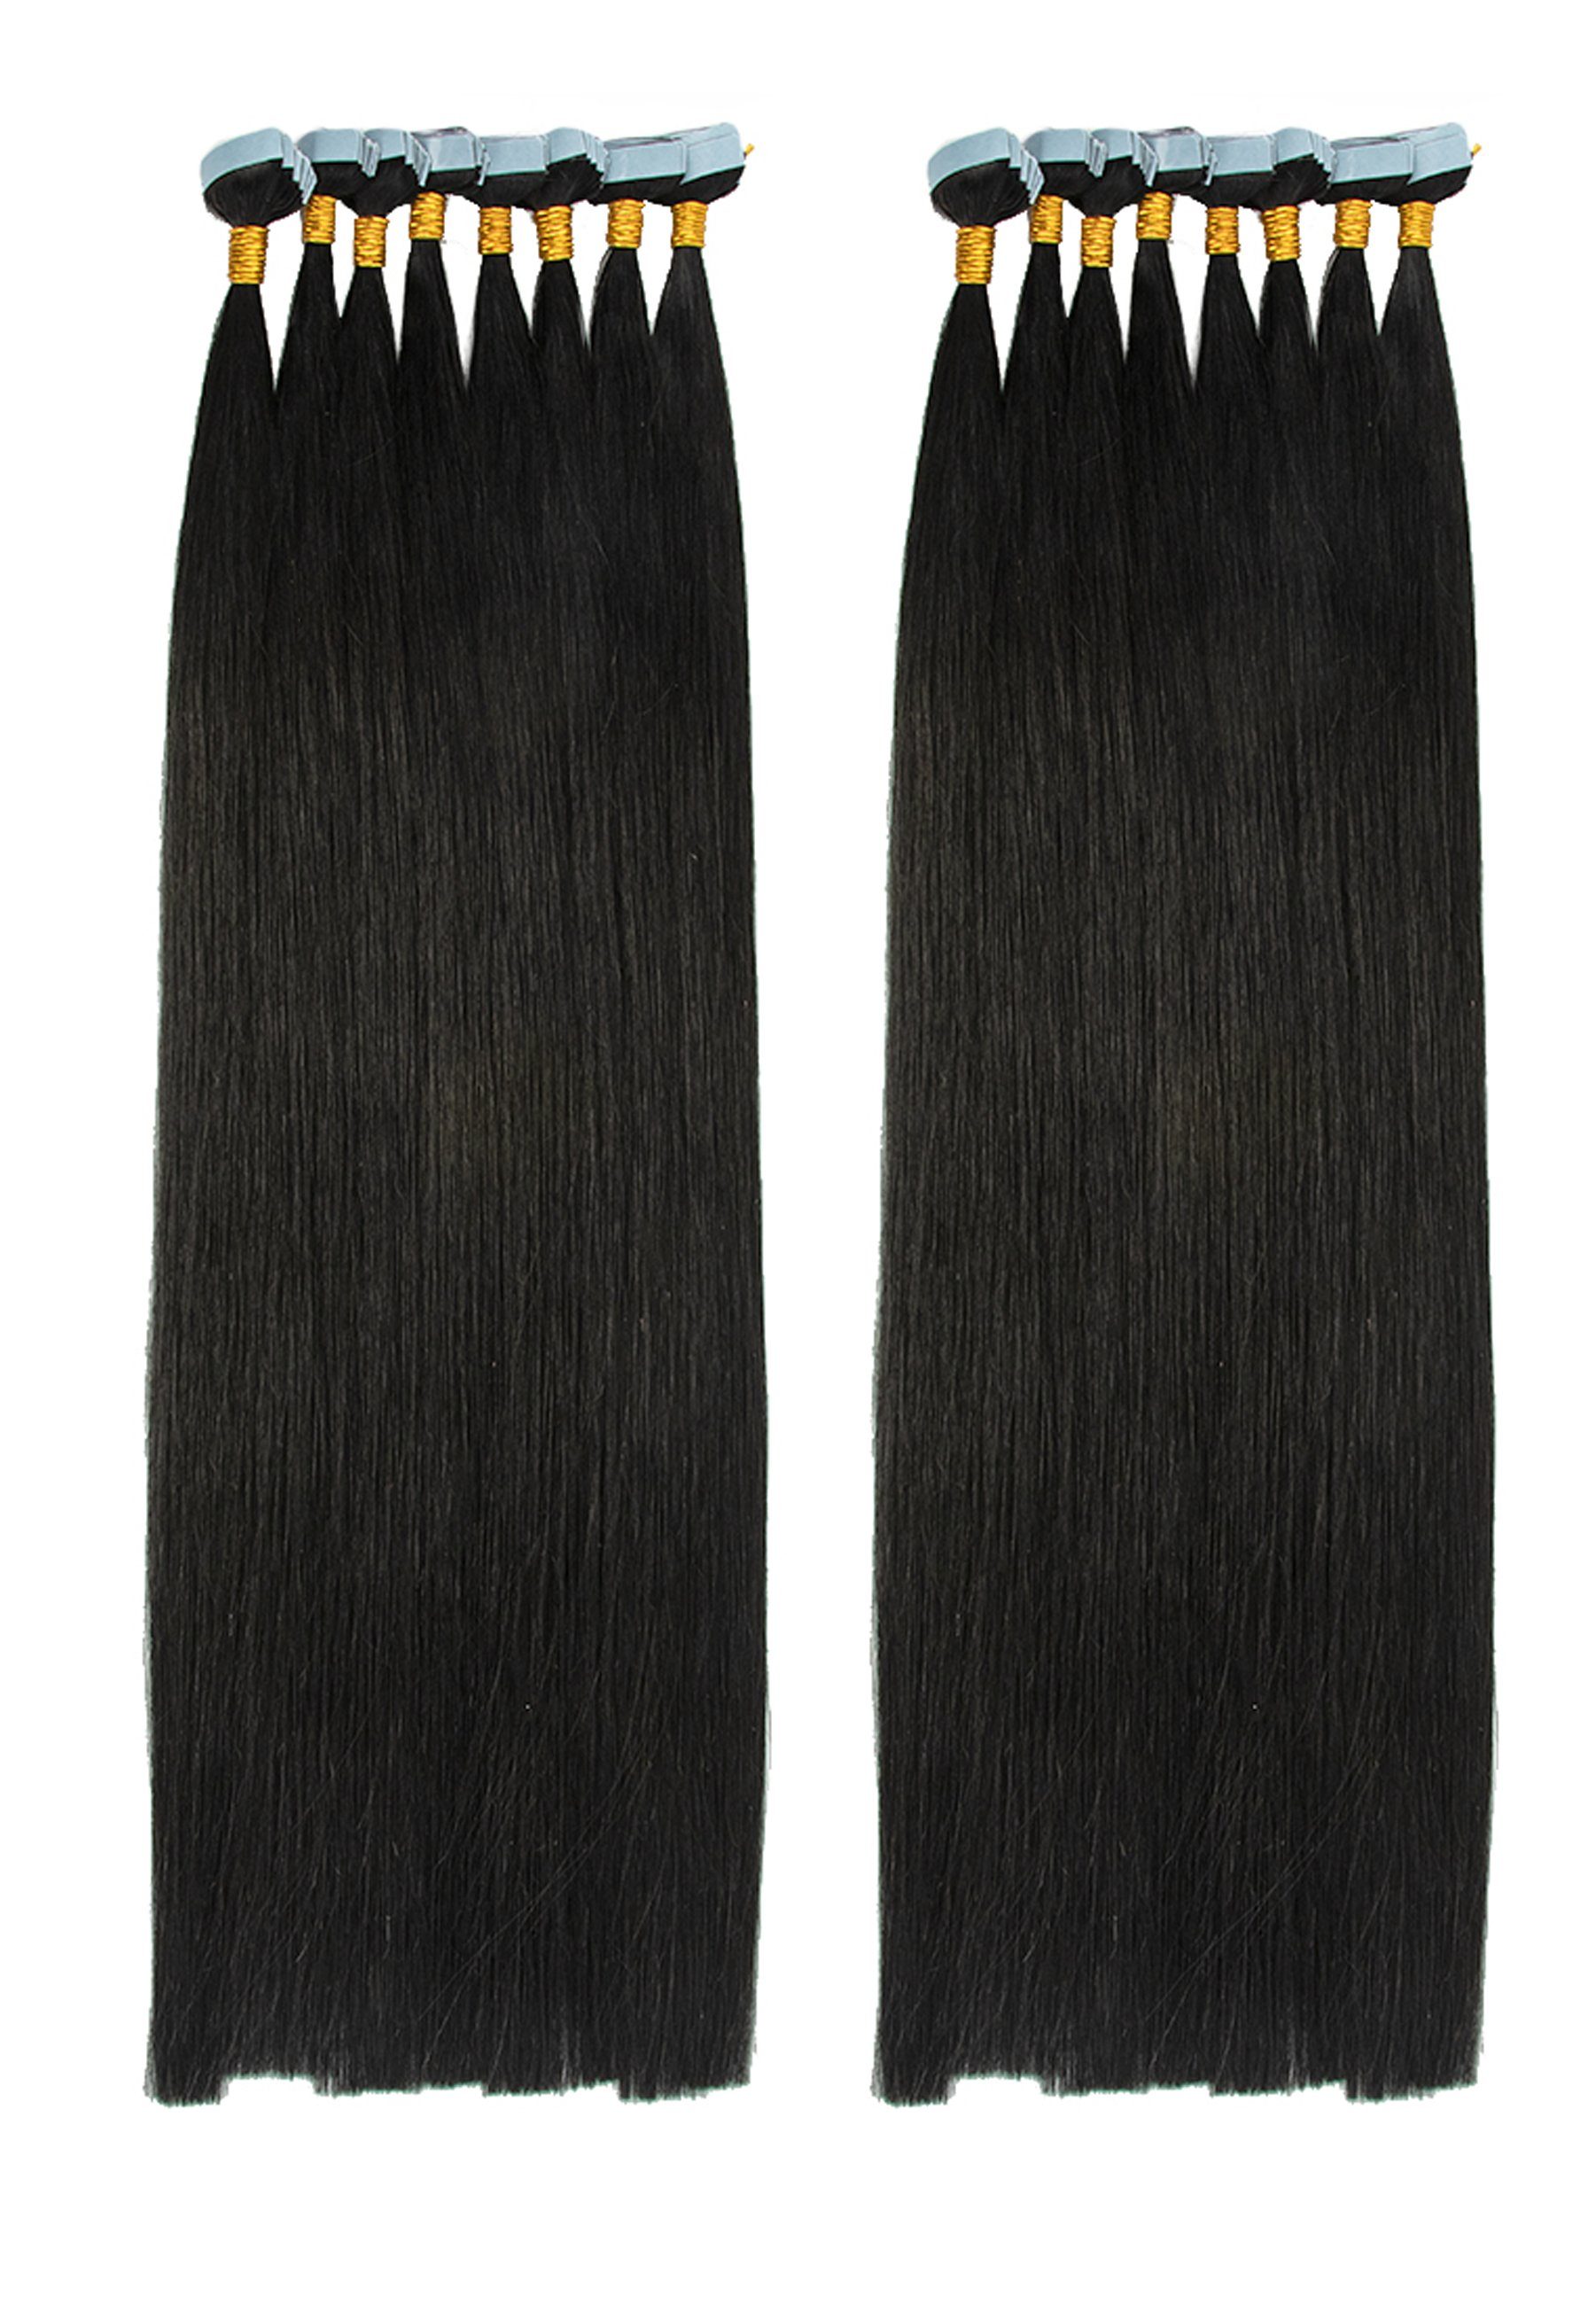 100 Fashion 25 Hair Skin-Wefts Double & Drawn jet cm Remy Echthaar Style YC On-Extension black-60 #1 gr, Tape Echthaar-Extension Menschenhaar %